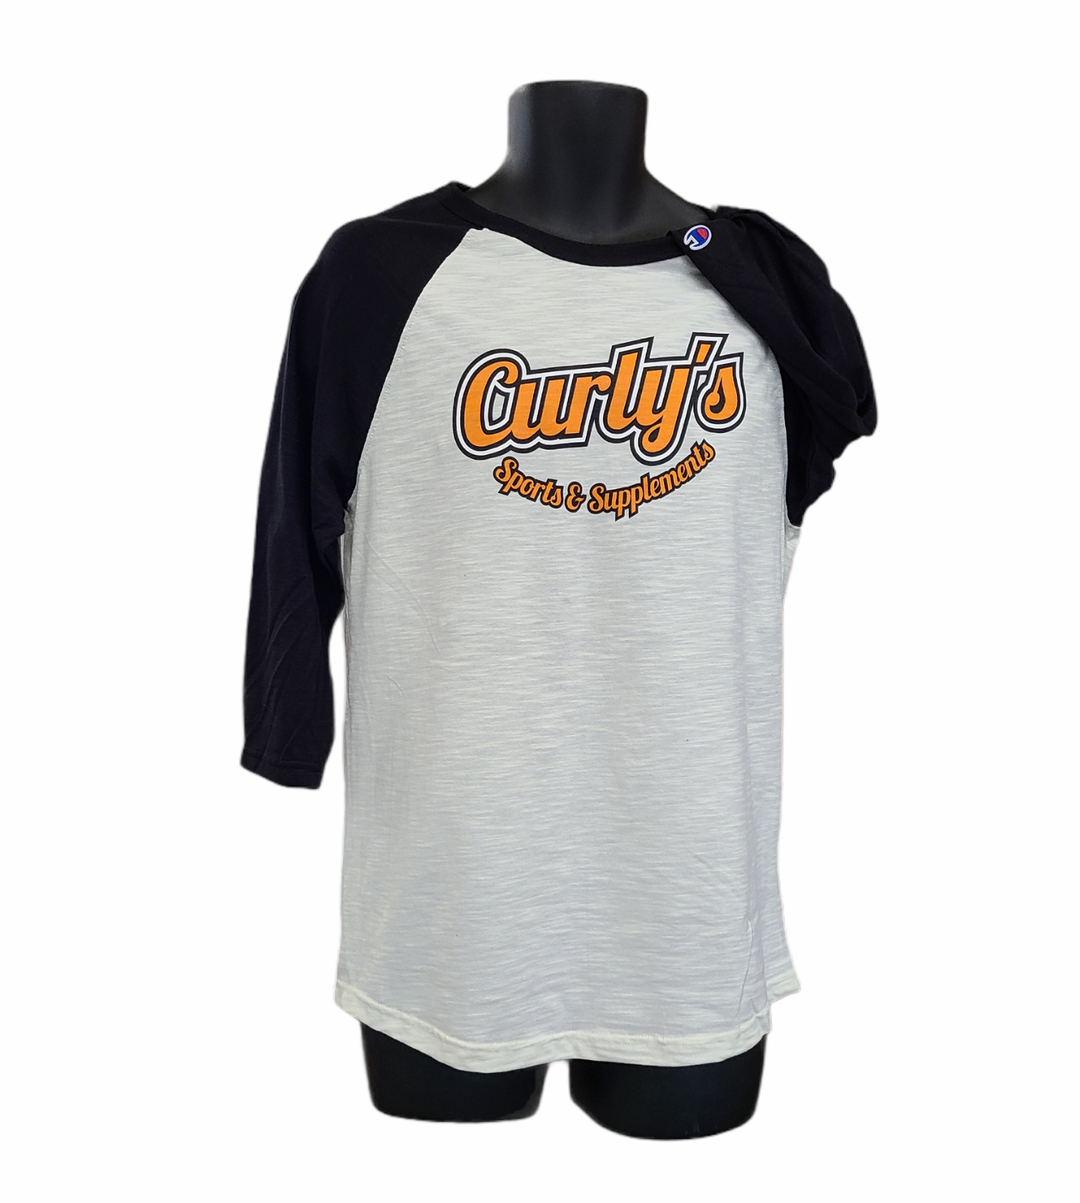 Curly's Signature Baseball Shirt